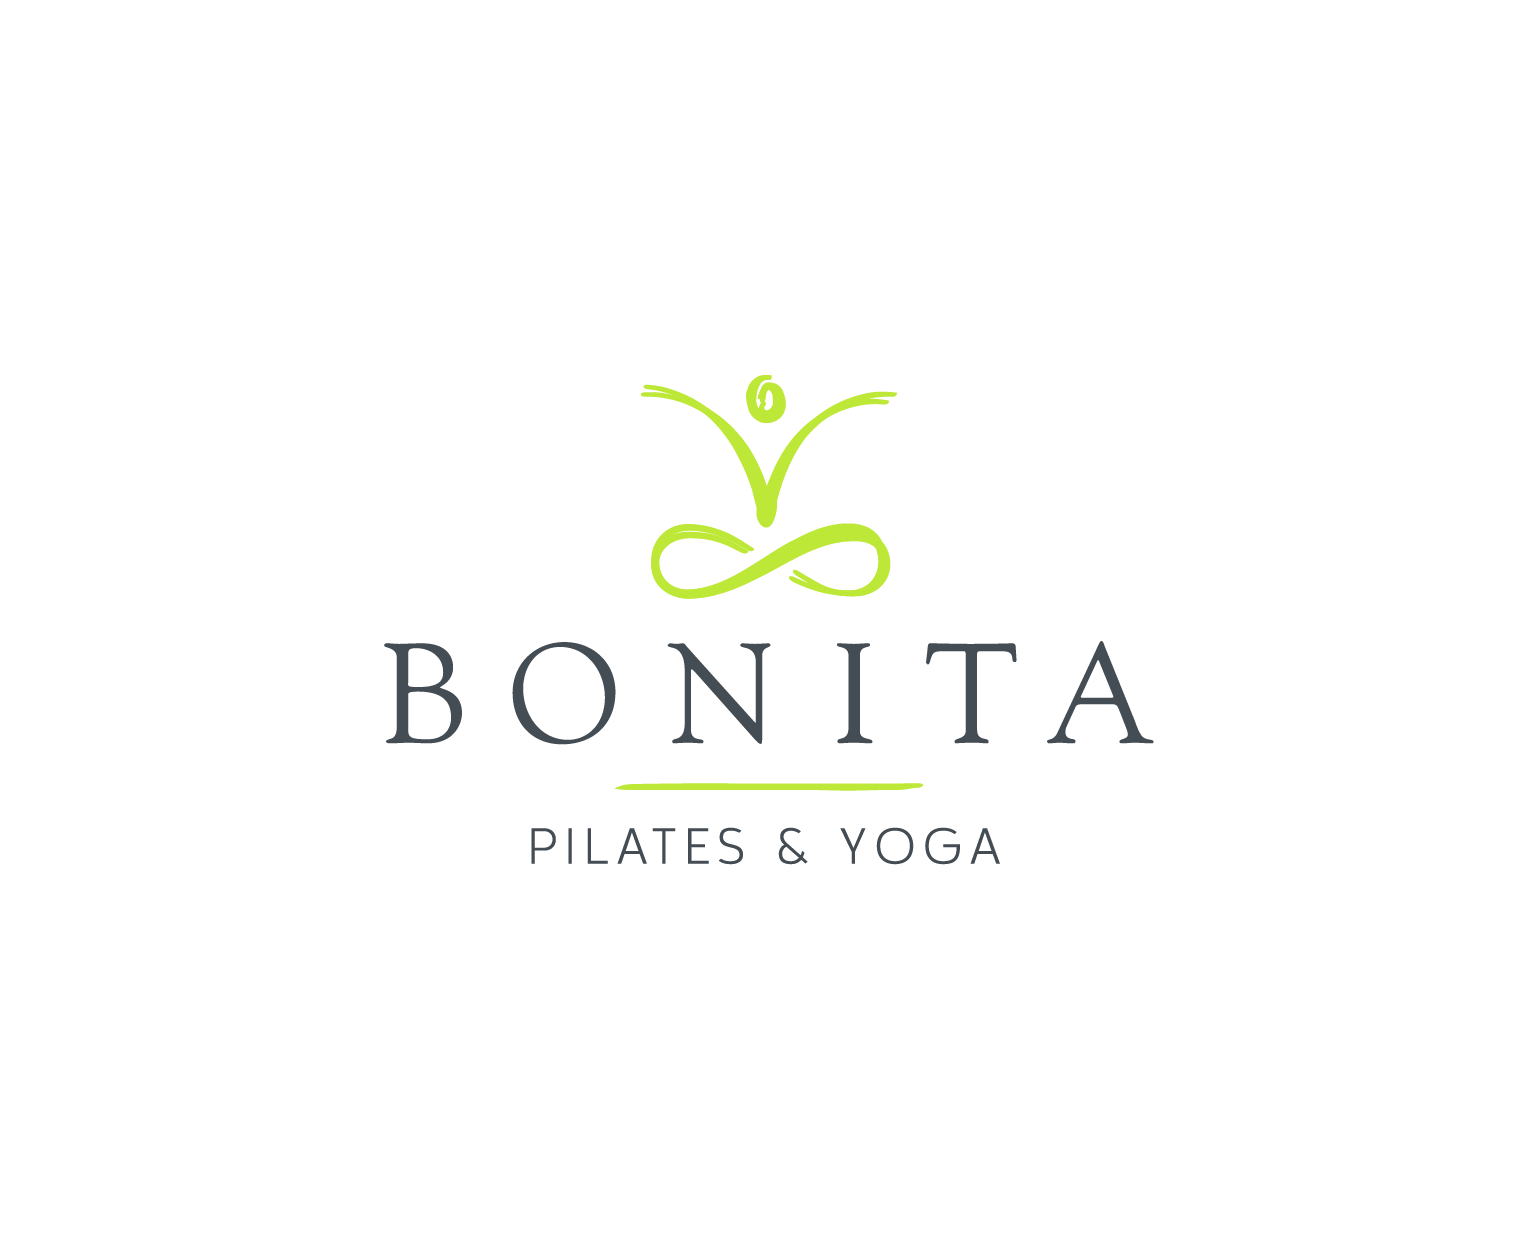 Bonita Pilates & Yoga - Brand Development and Logo Design